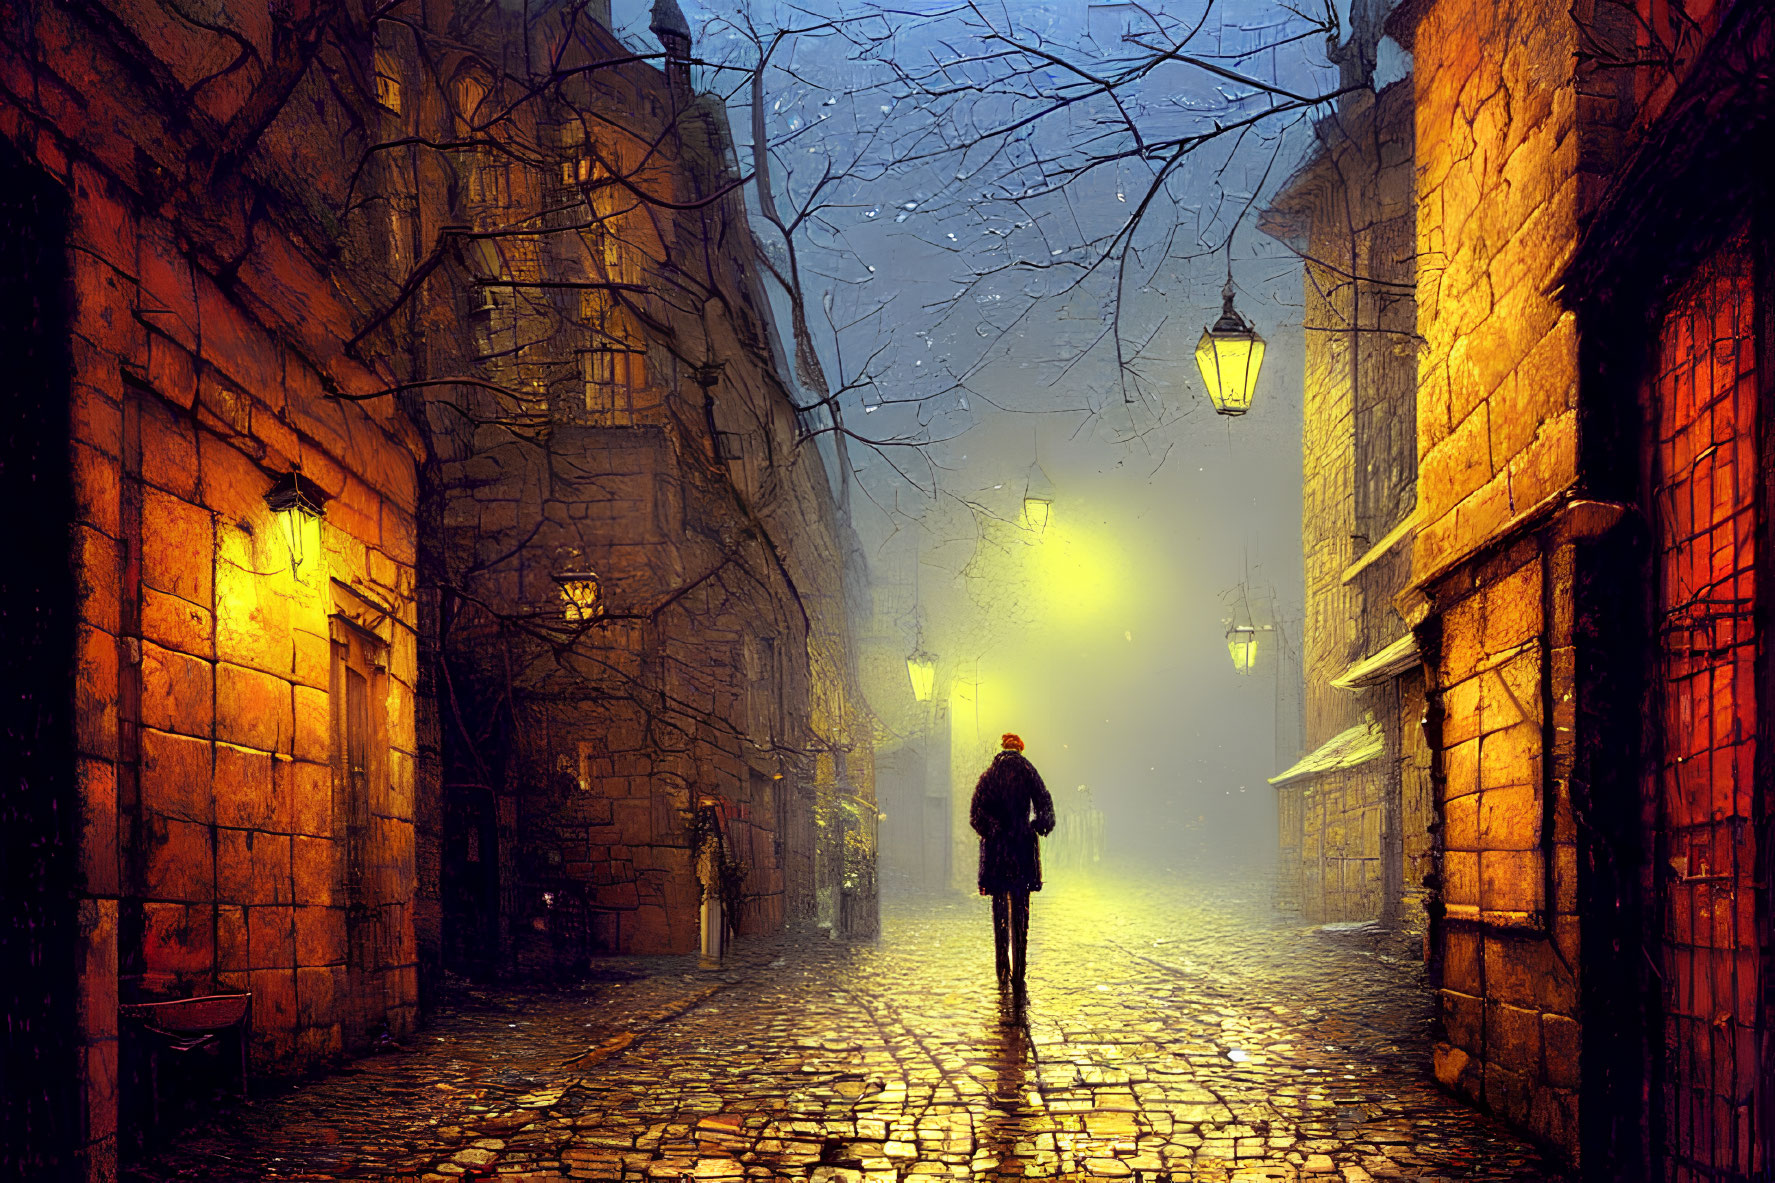 Solitary figure walking in misty cobblestone alley at dusk